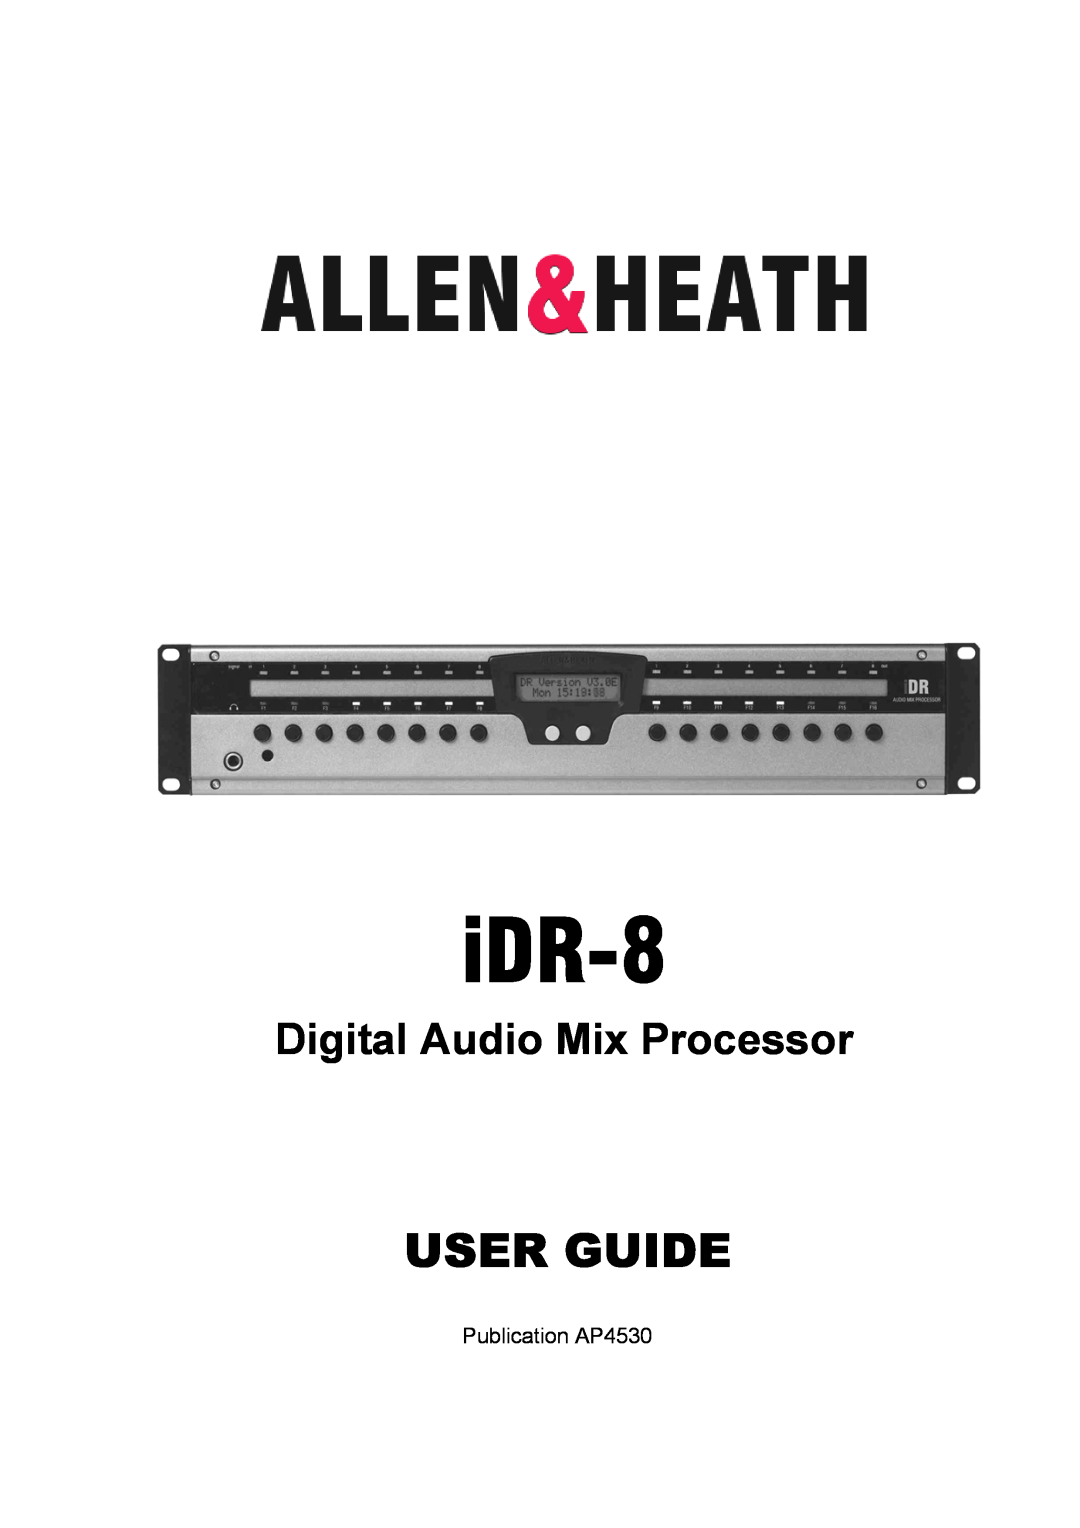 Compex Systems manual Publication AP4530, iDR-8, User Guide, Digital Audio Mix Processor 